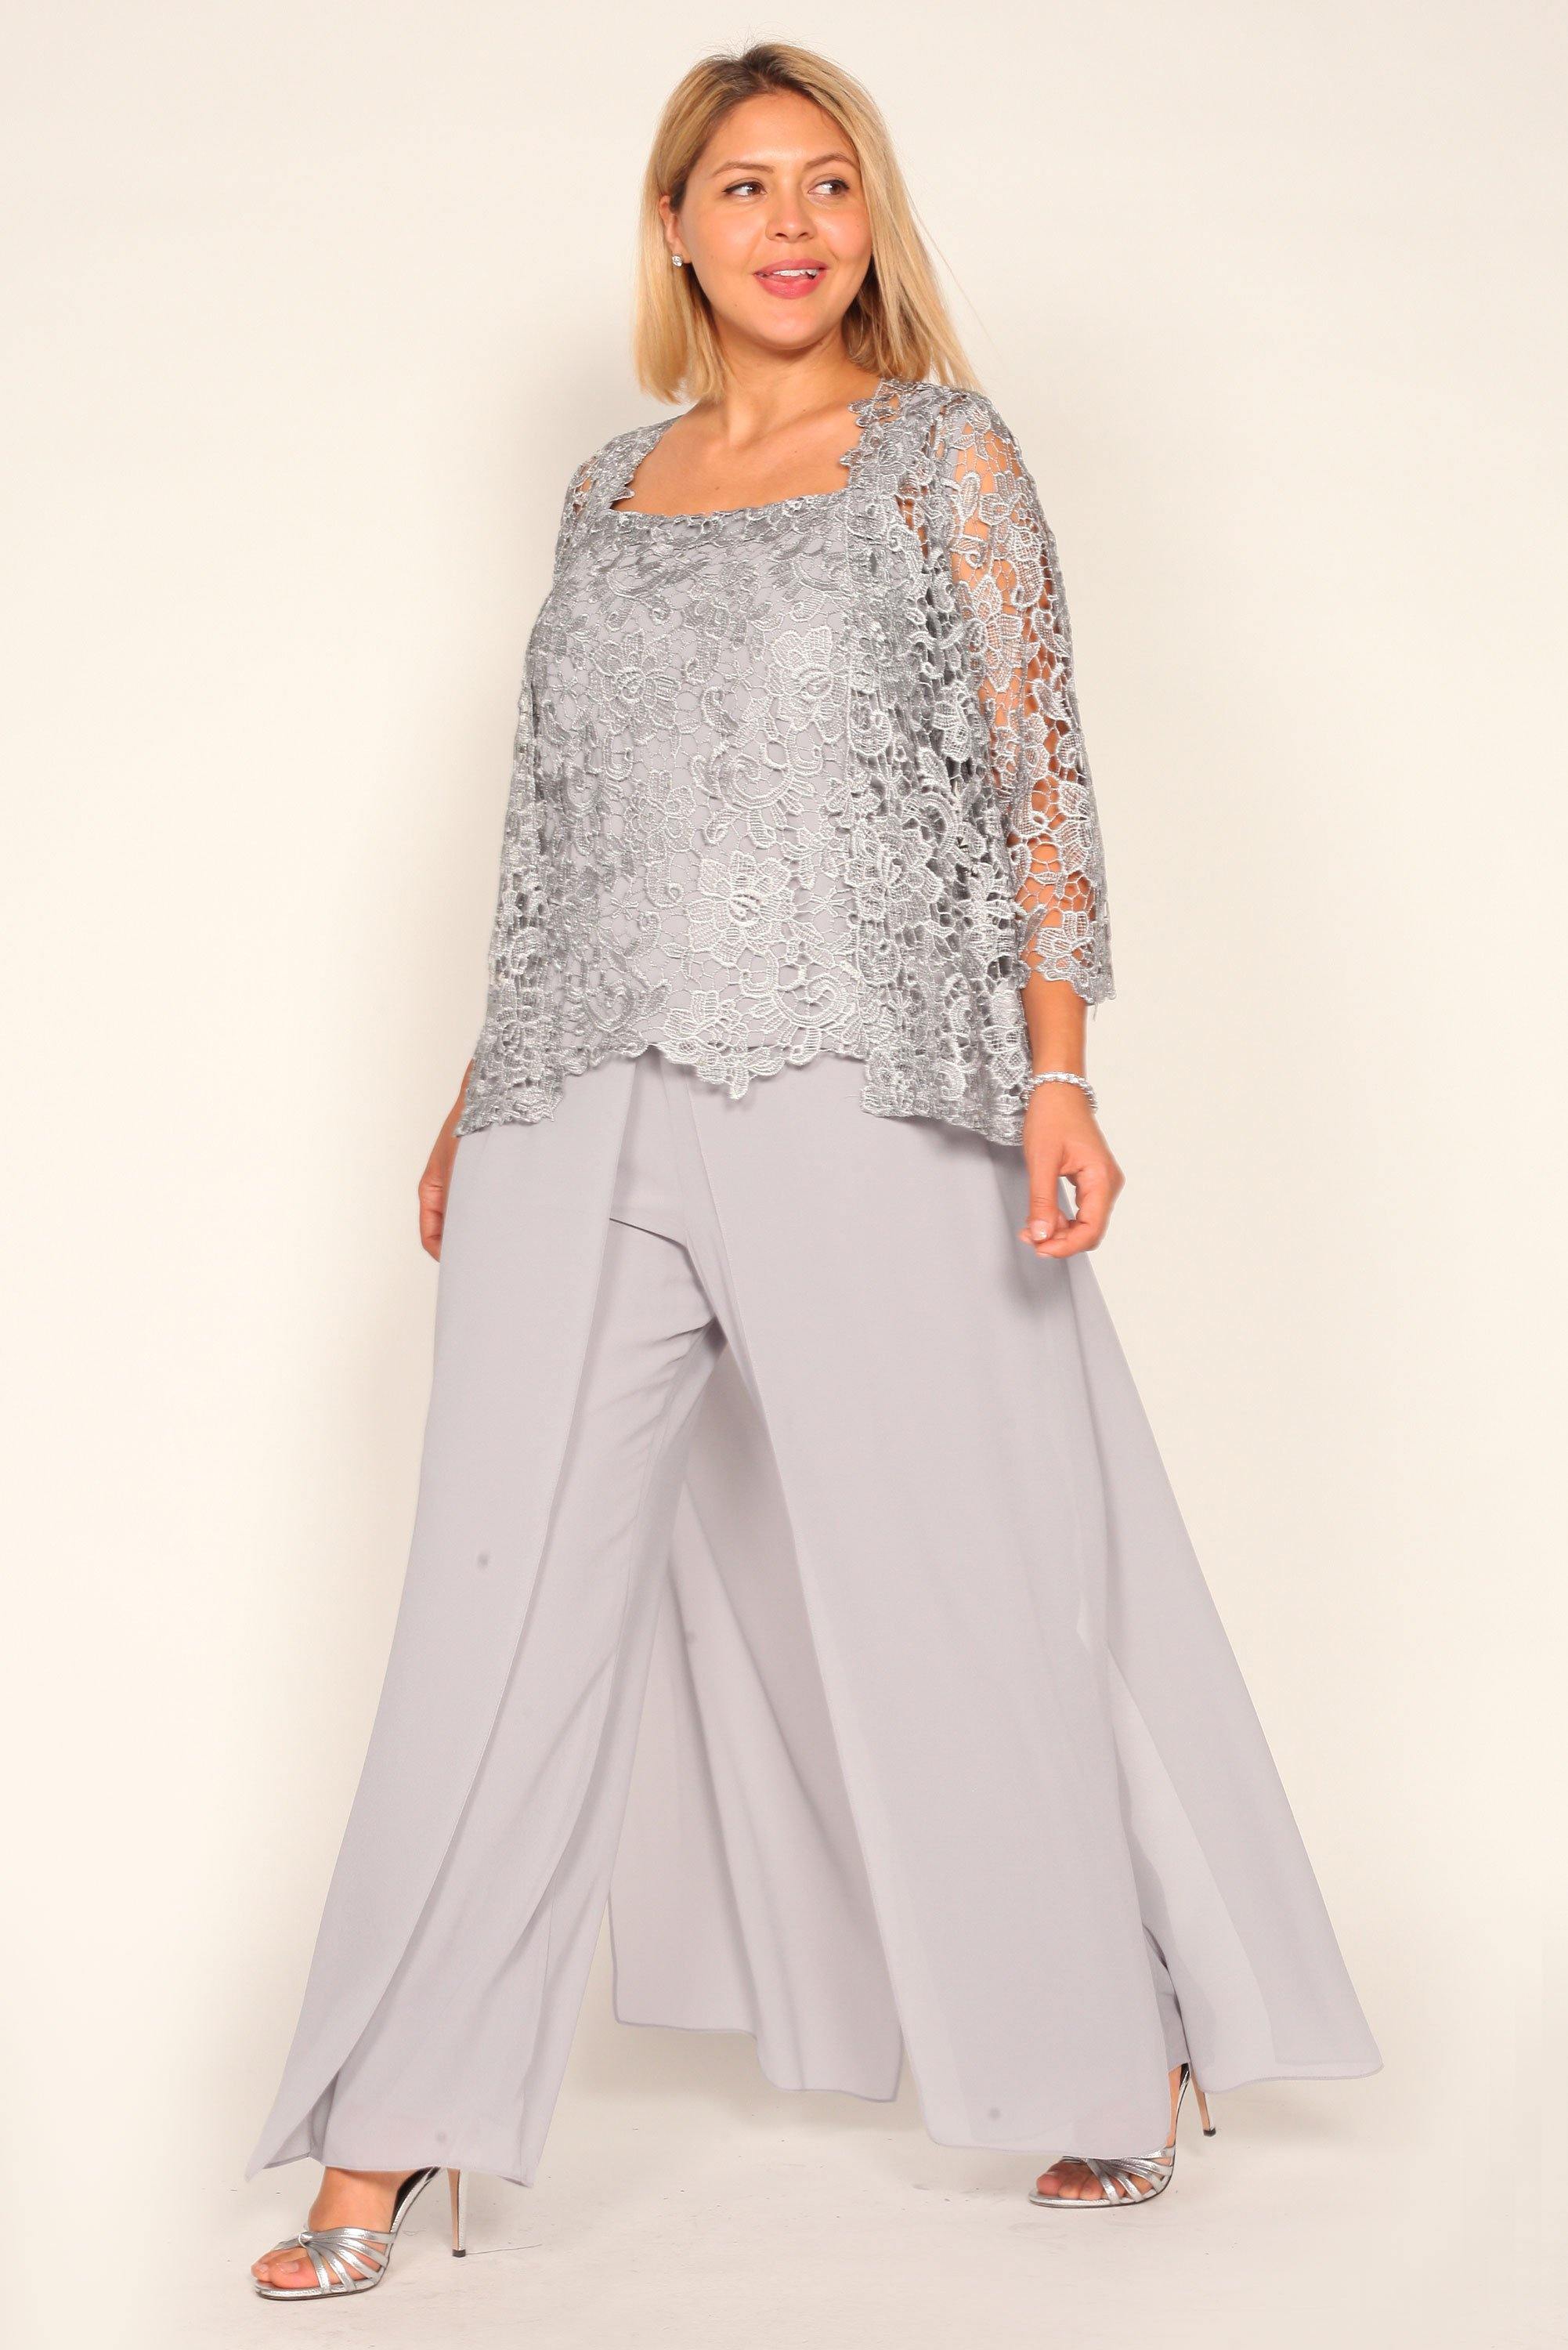 Elegant Lace Mother Of The Bride Pants Suits Wedding Guest Dress Plus Size  Chiffon Mothers Groom Dresses Peplum